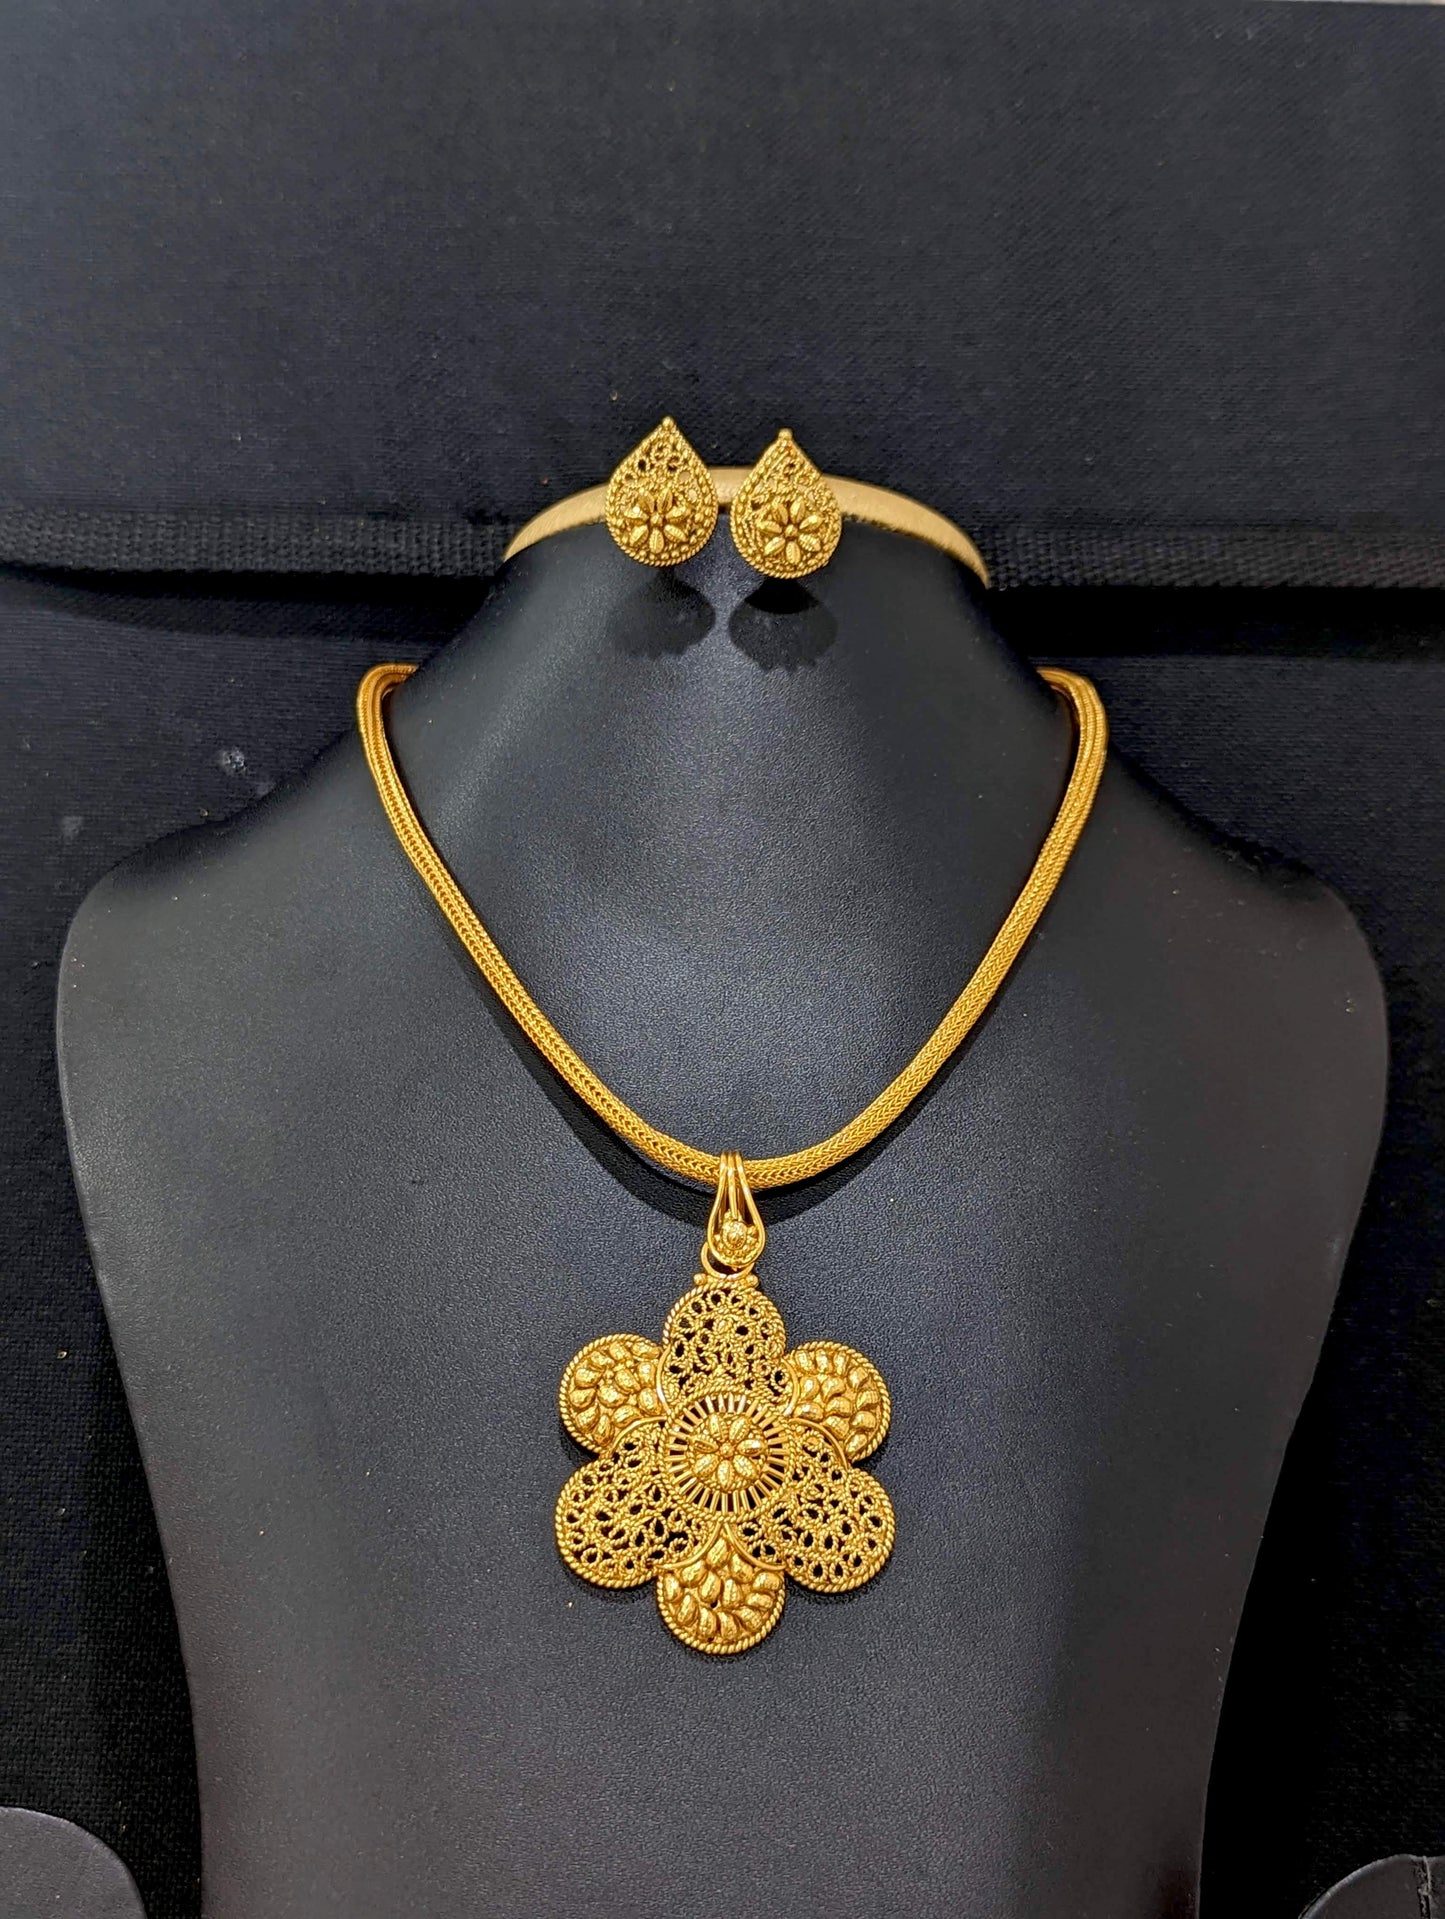 Gold look alike Pendant and Earrings Set - Design 4